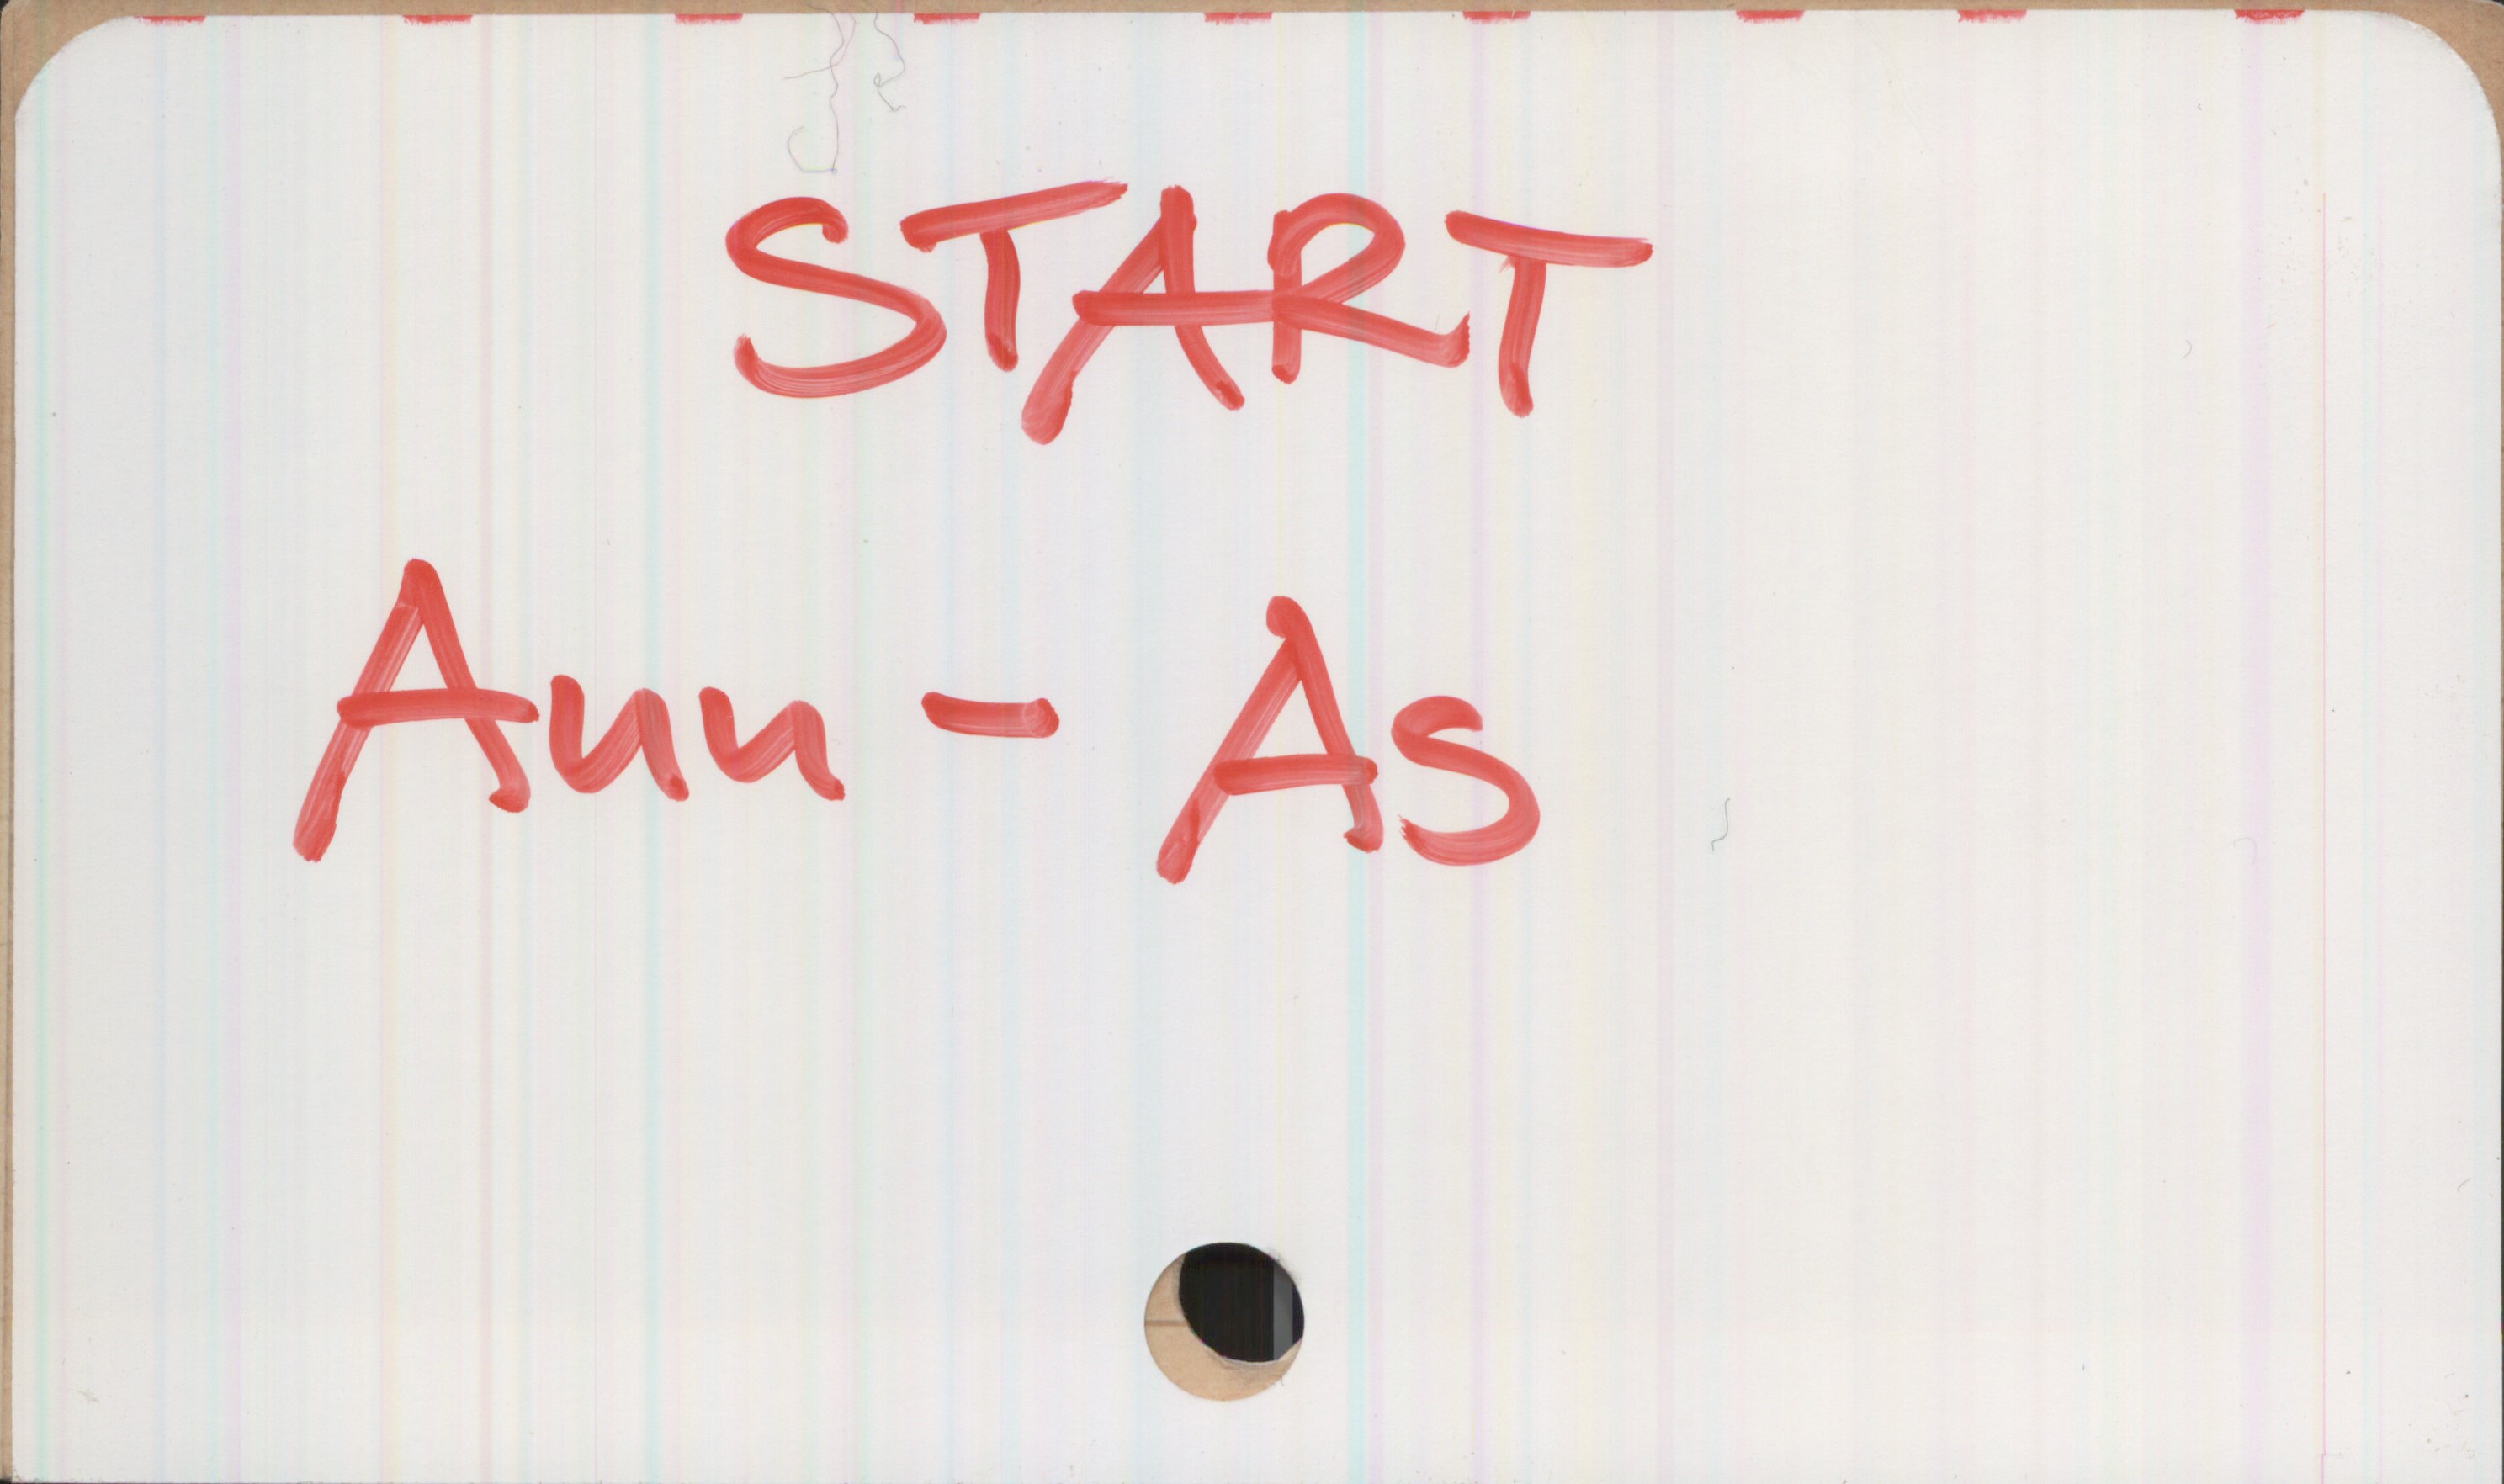  START
AW "' As

